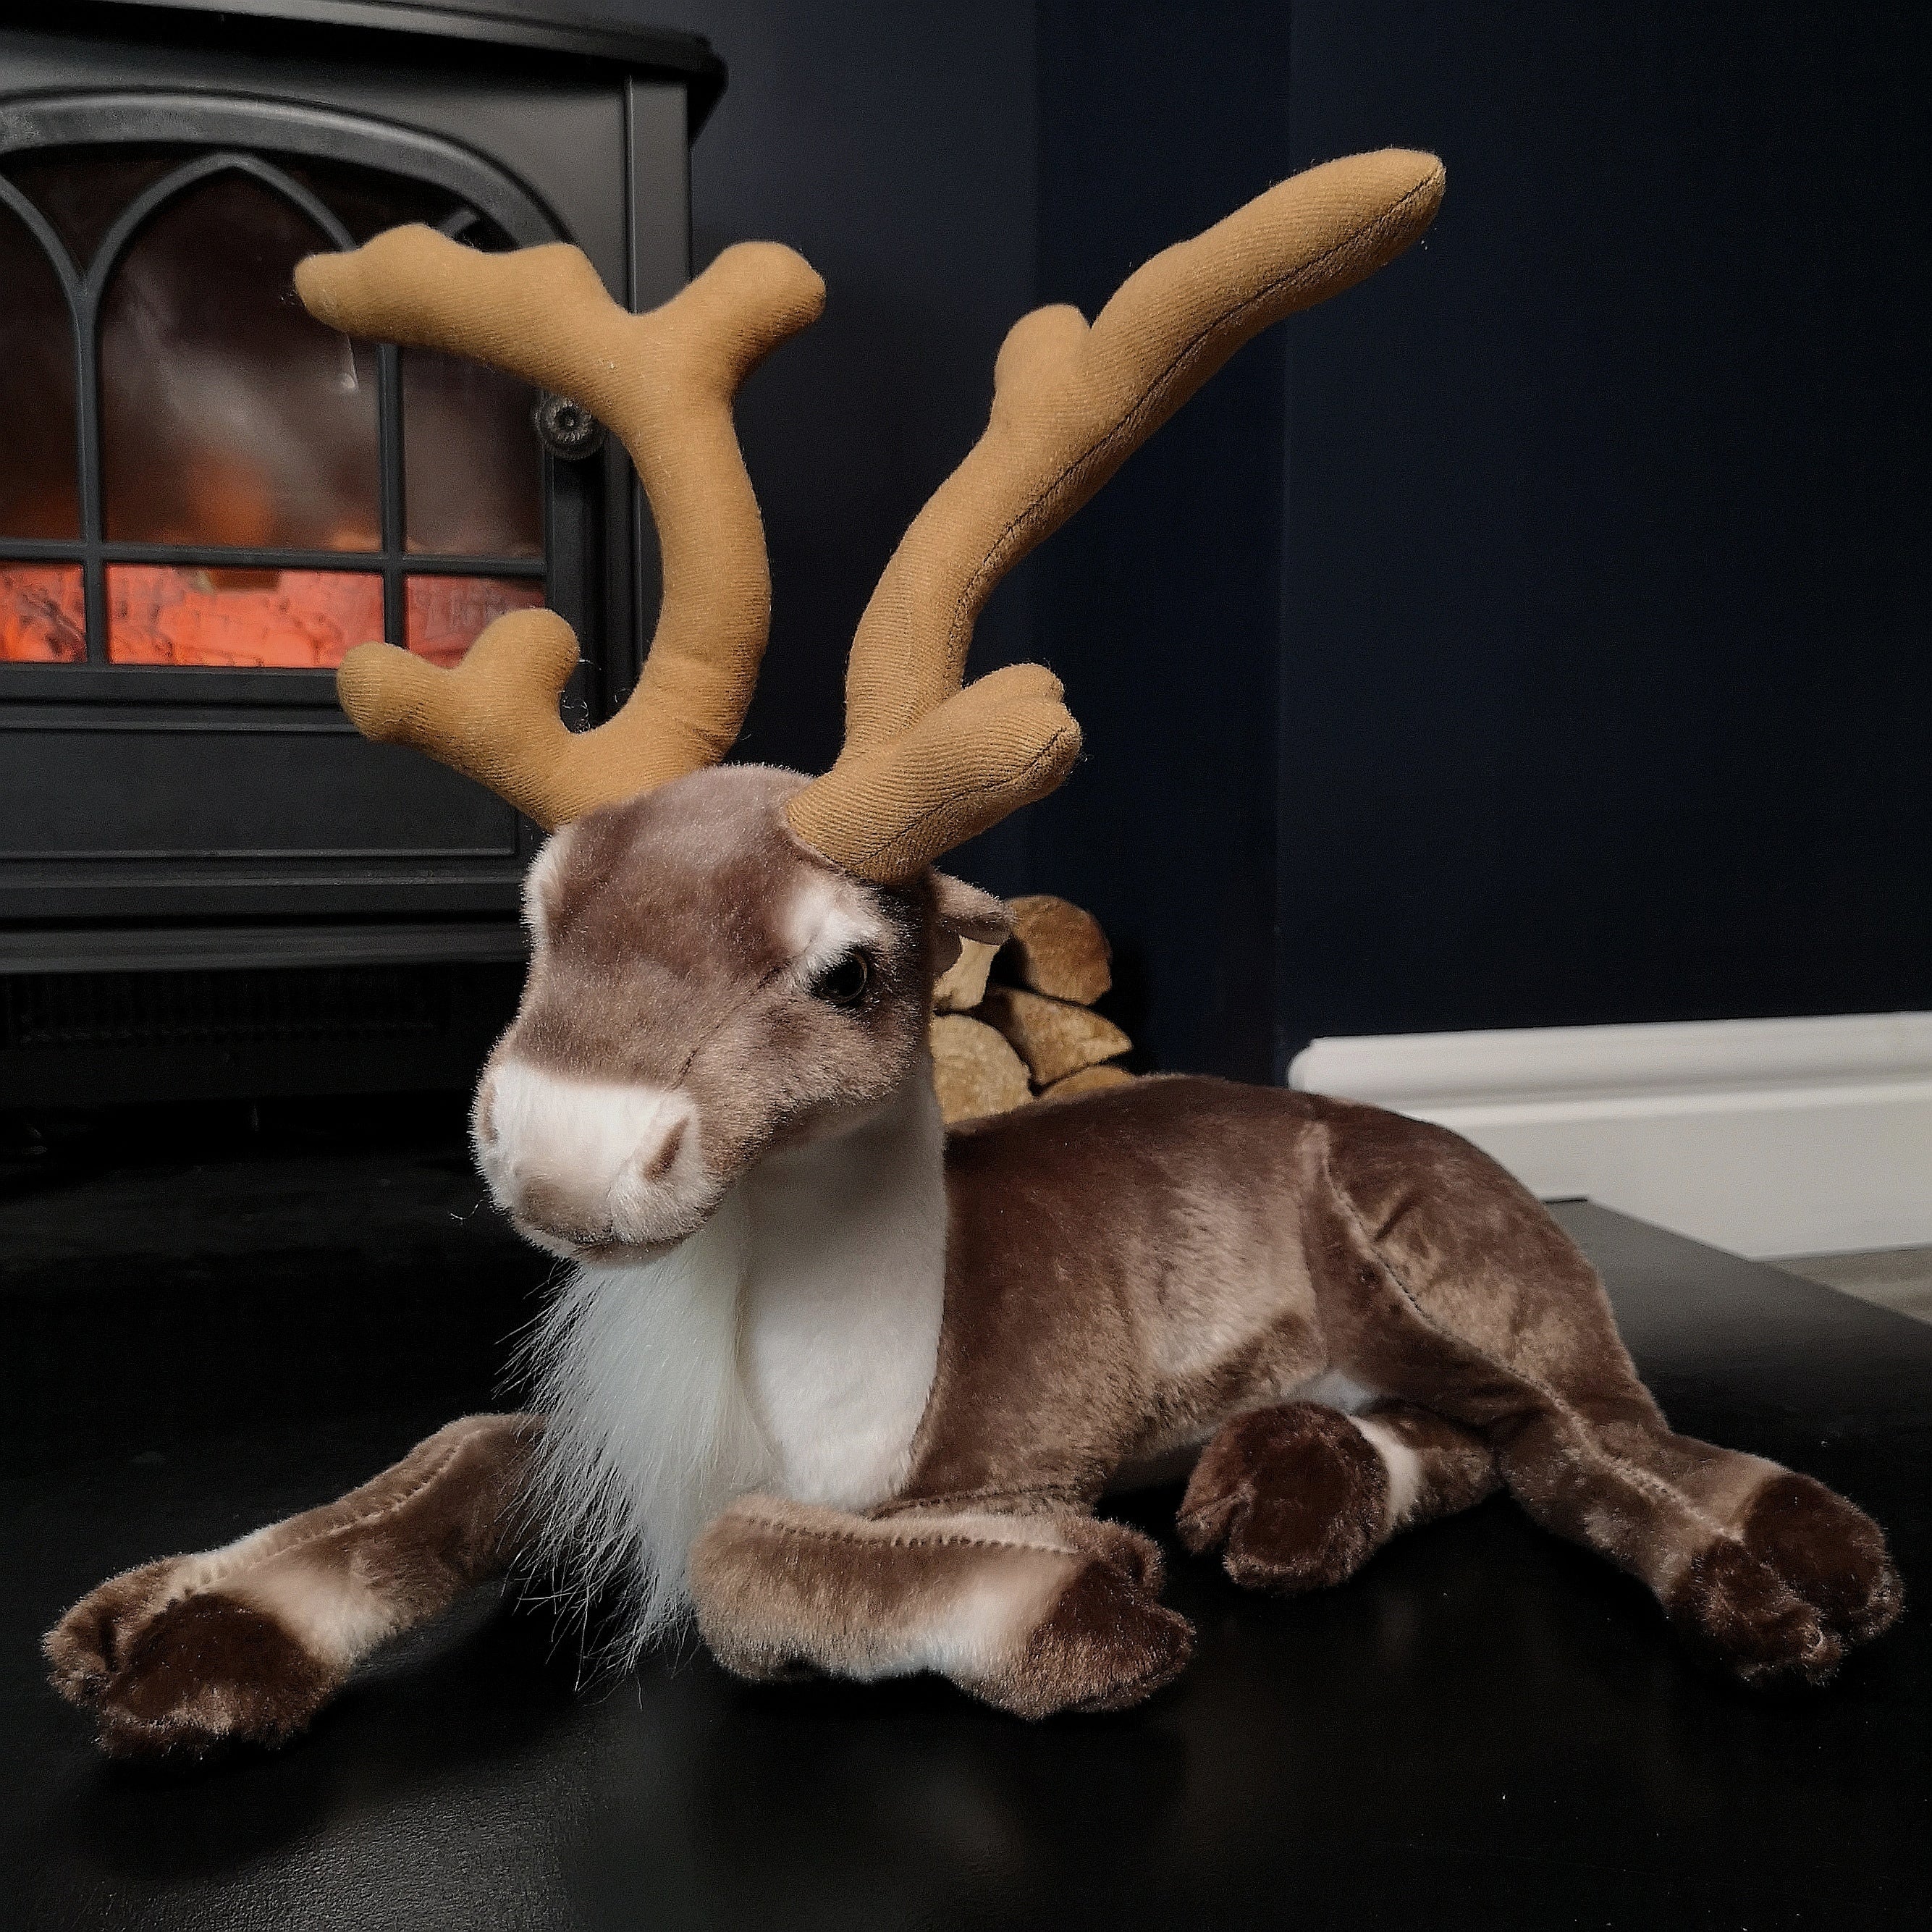 40cm Sitting Fabric Plush Reindeer Christmas Decoration / Ornament